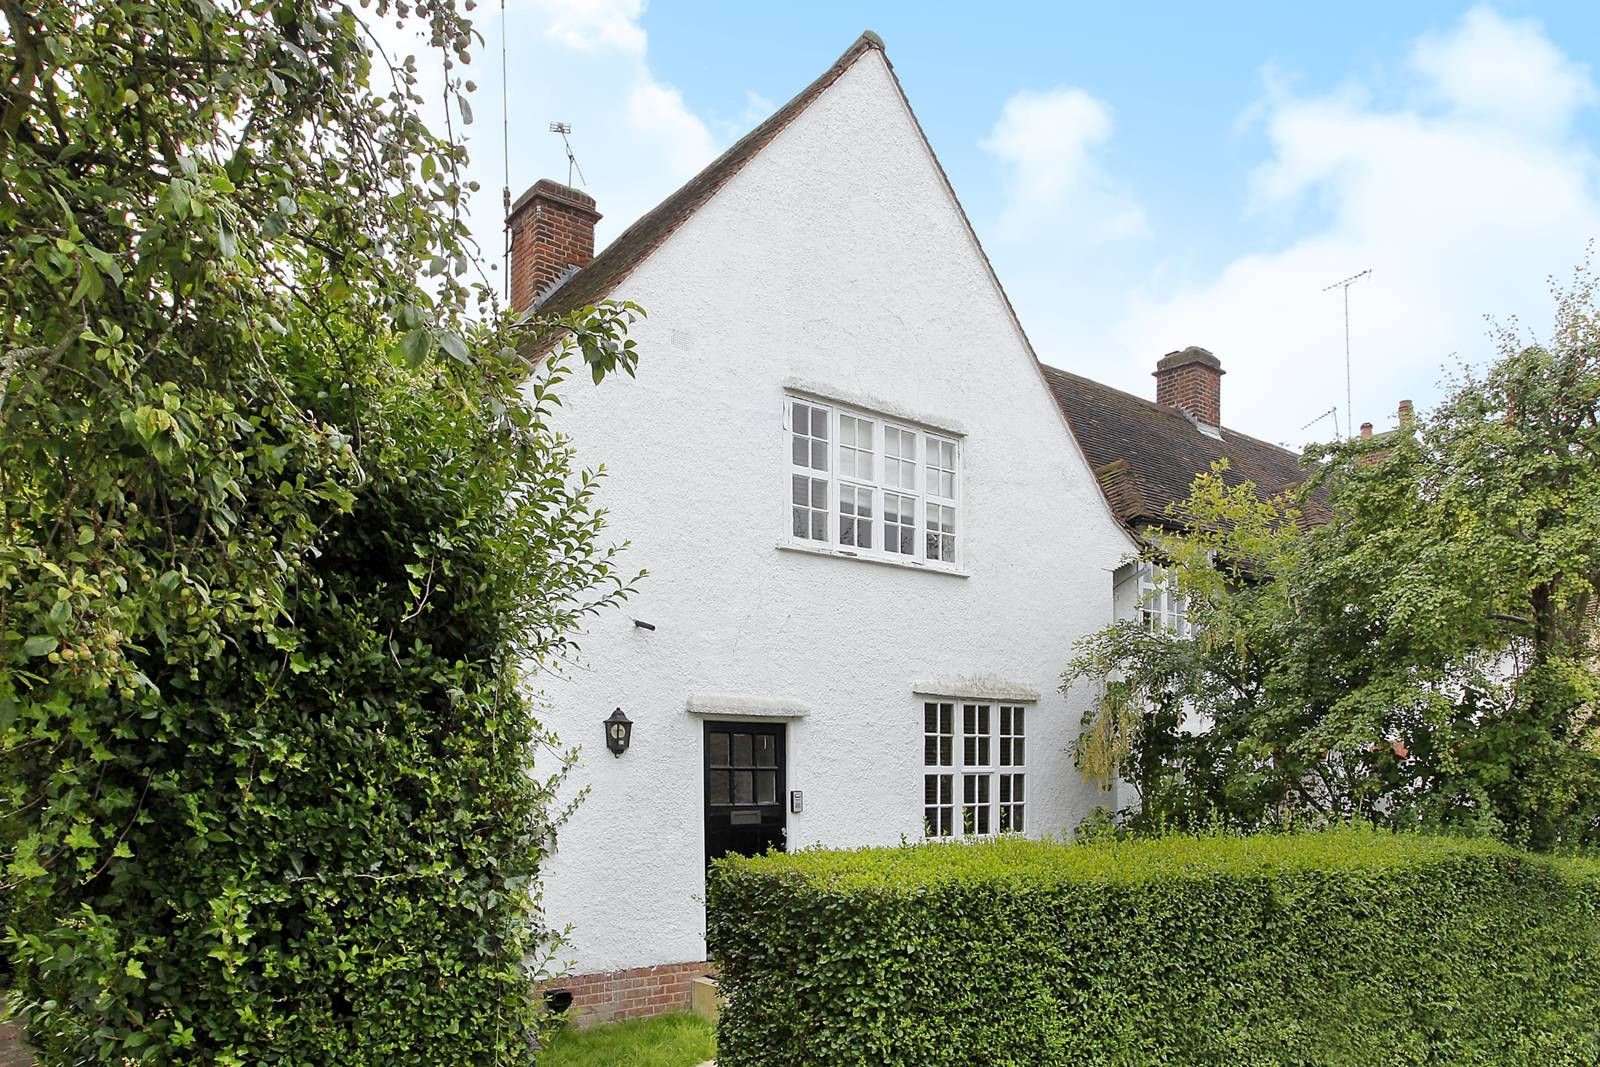 Similar Property: House in Hampstead Garden Suburb